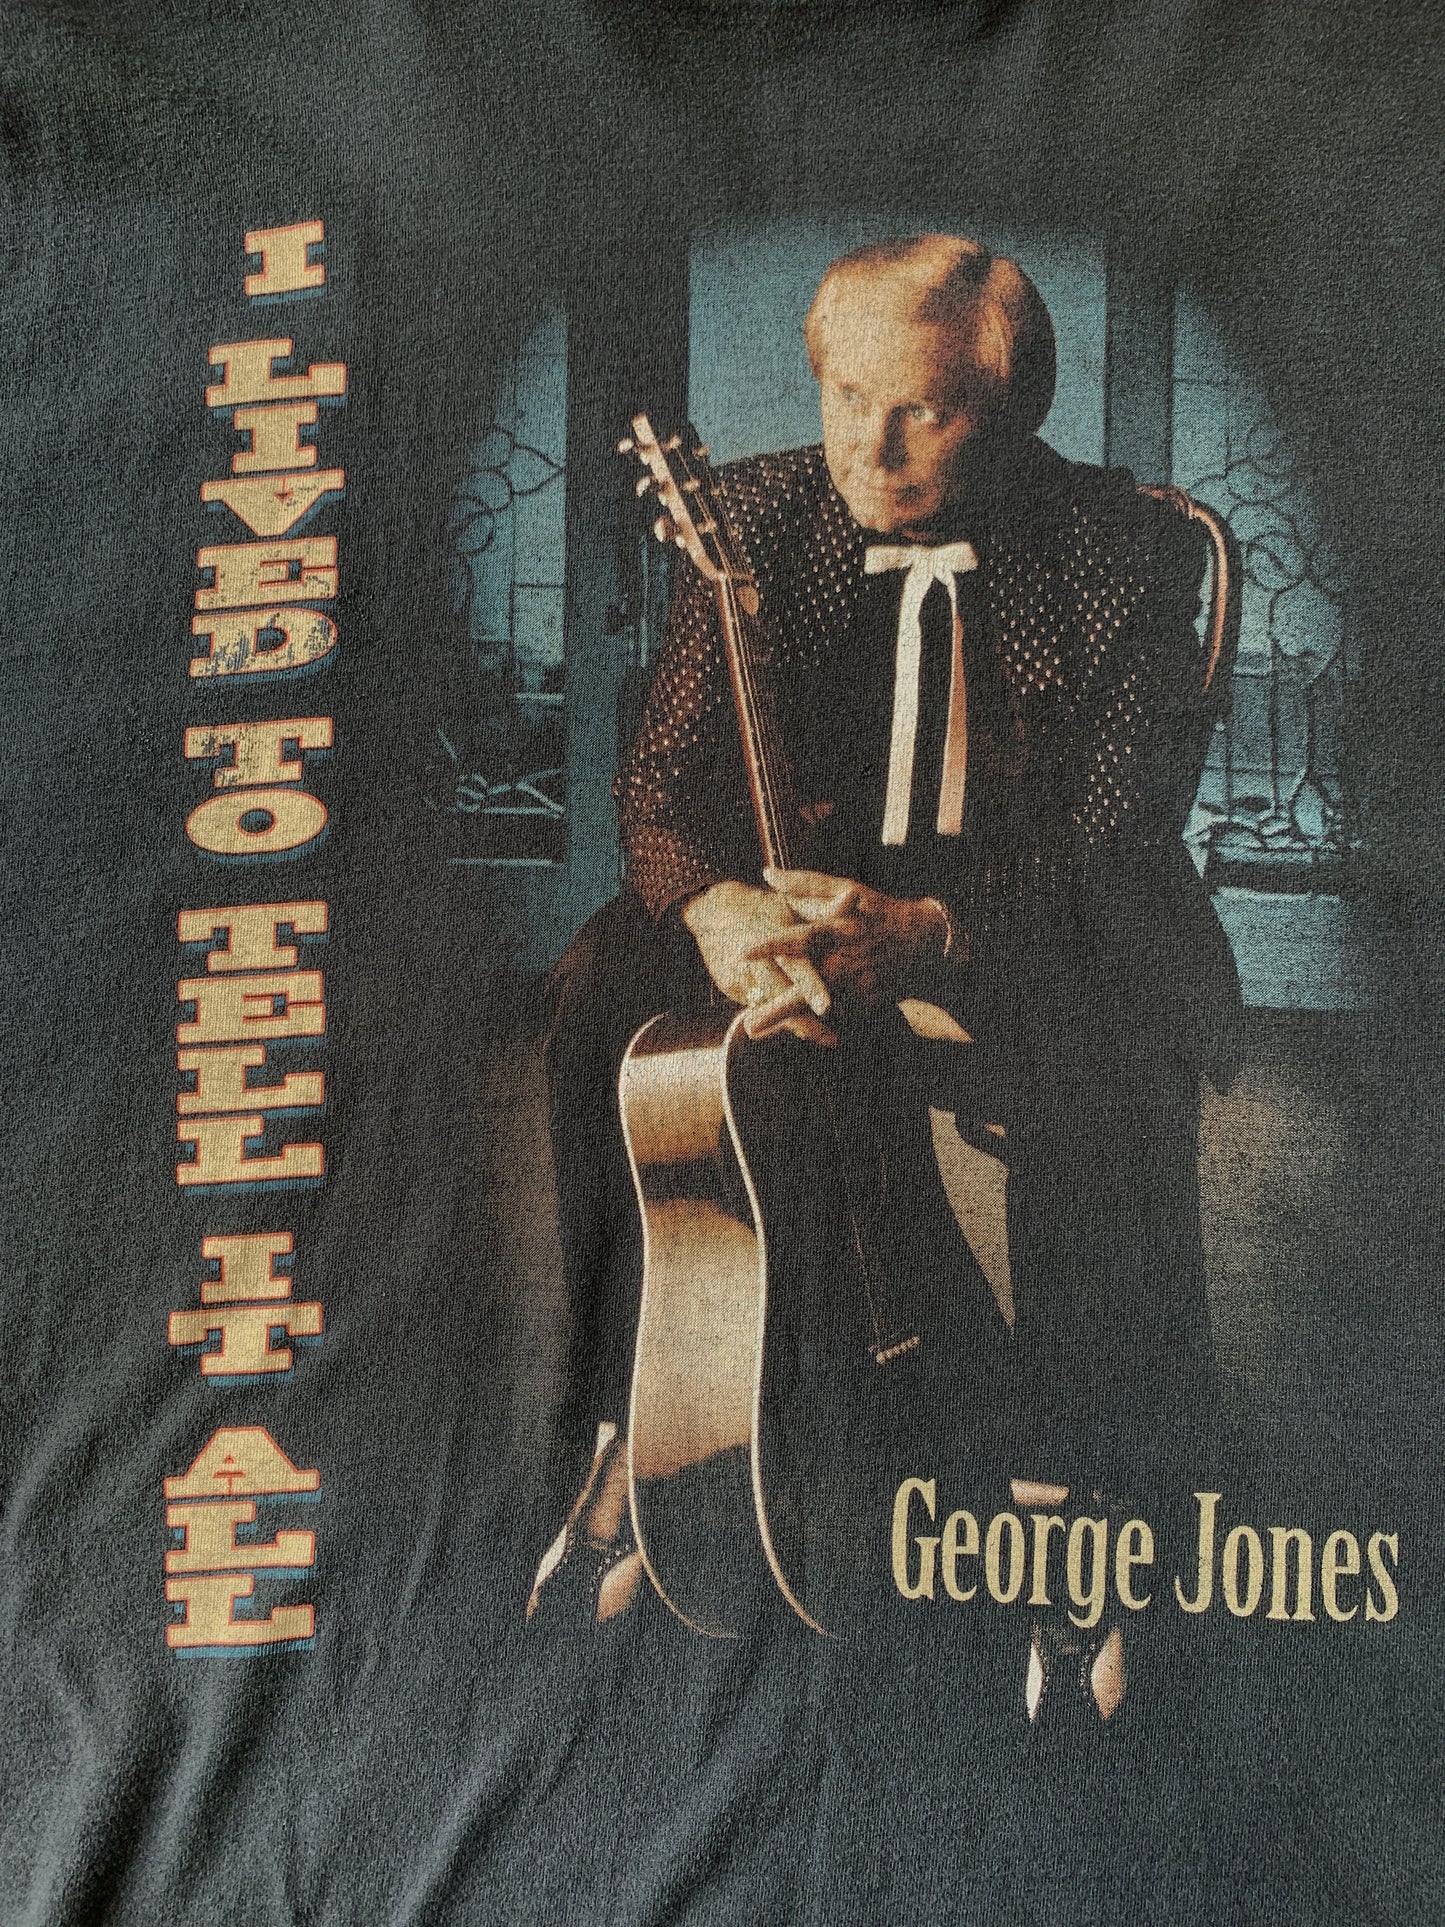 George Jones Live To Tell It All Tee